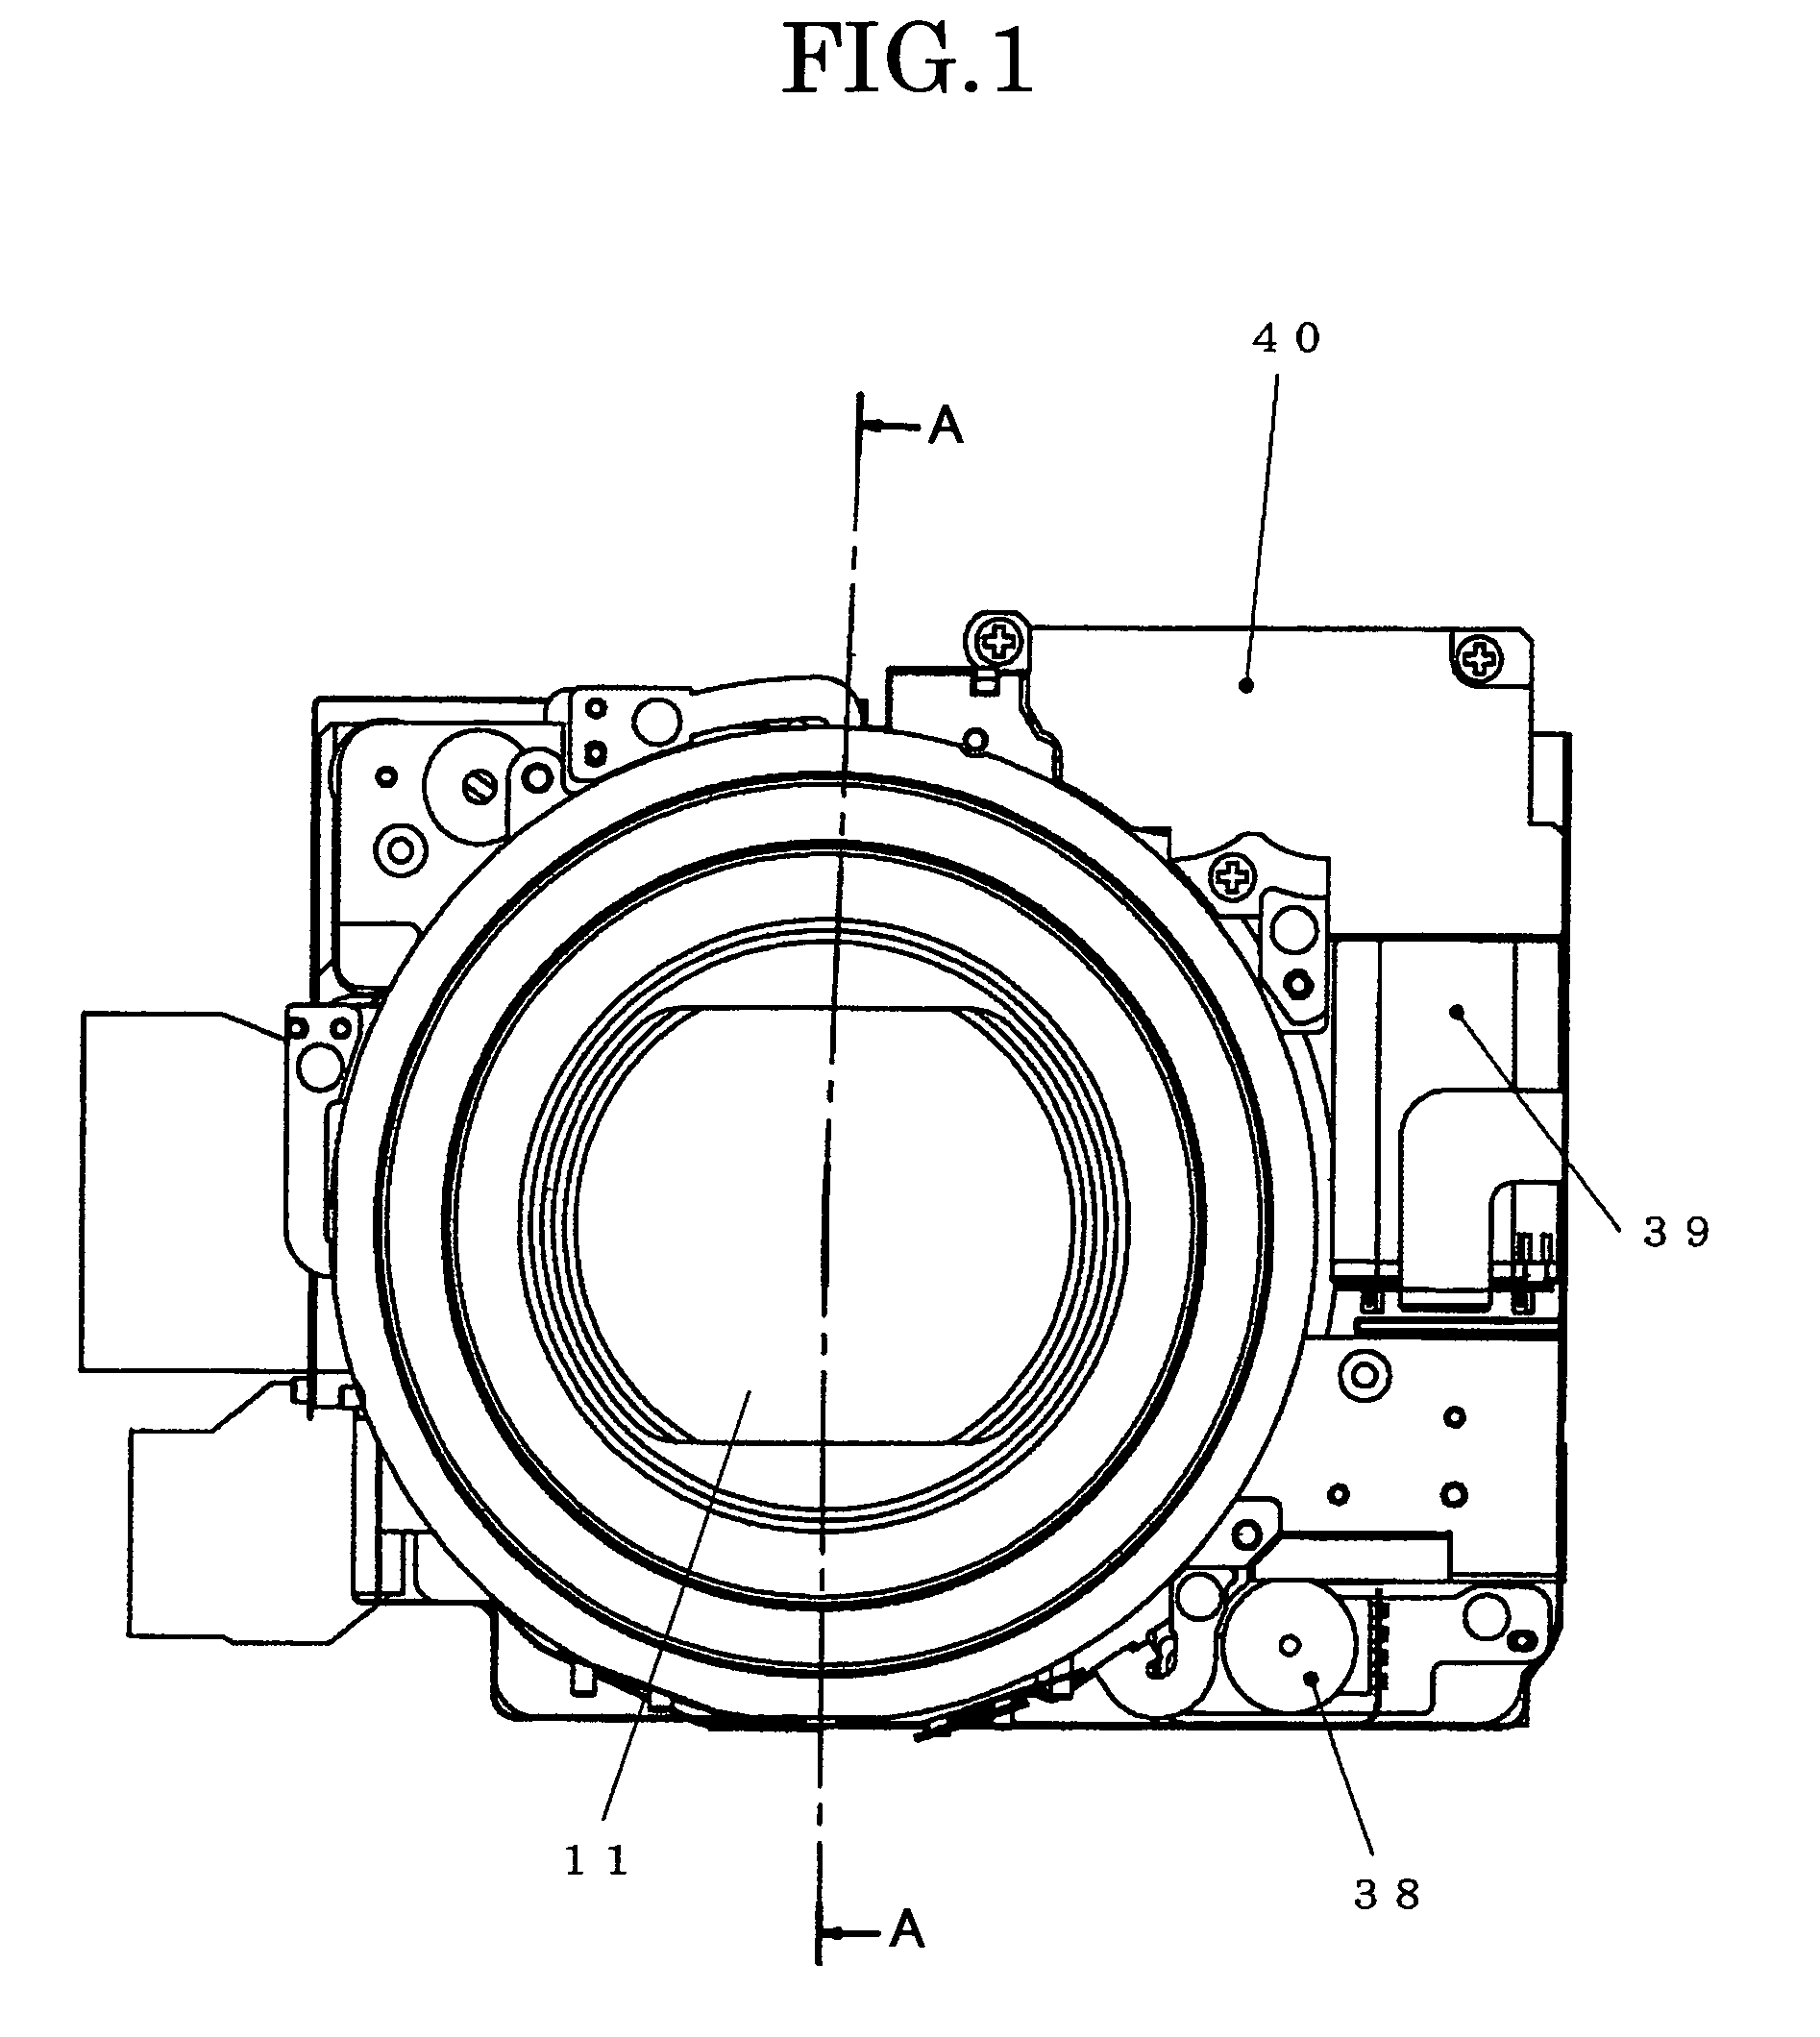 Lens barrel, camera and information device